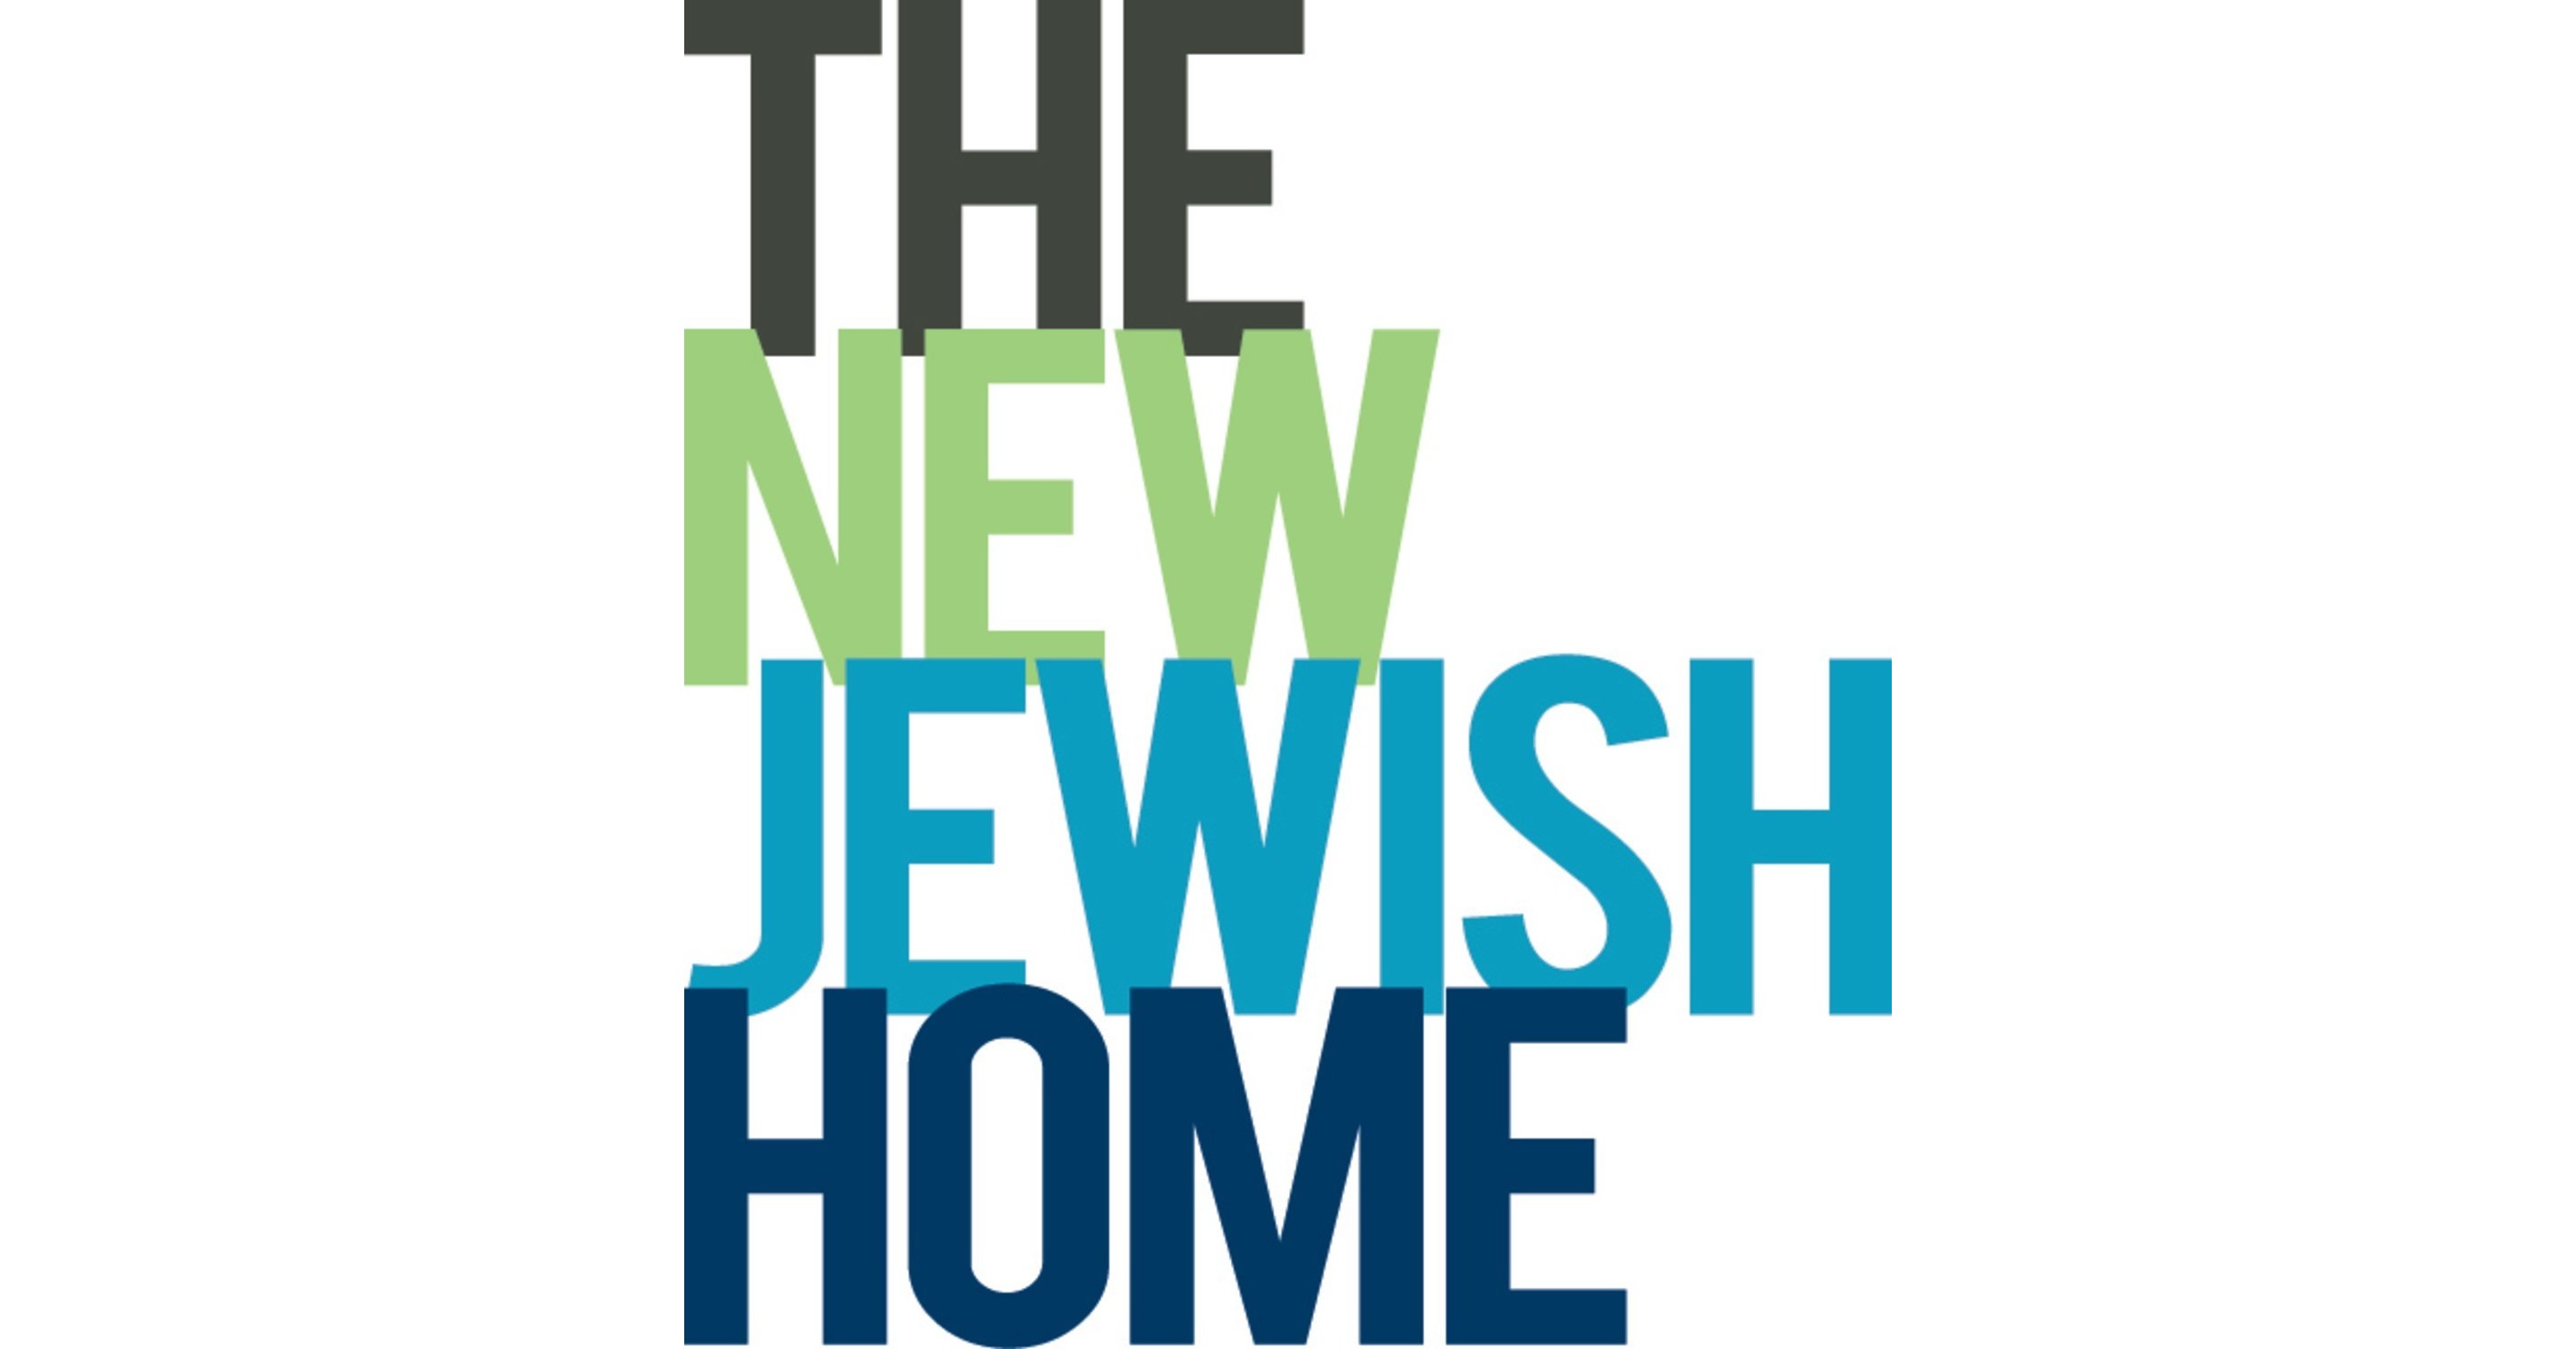 Joe Torre - The New Jewish Home